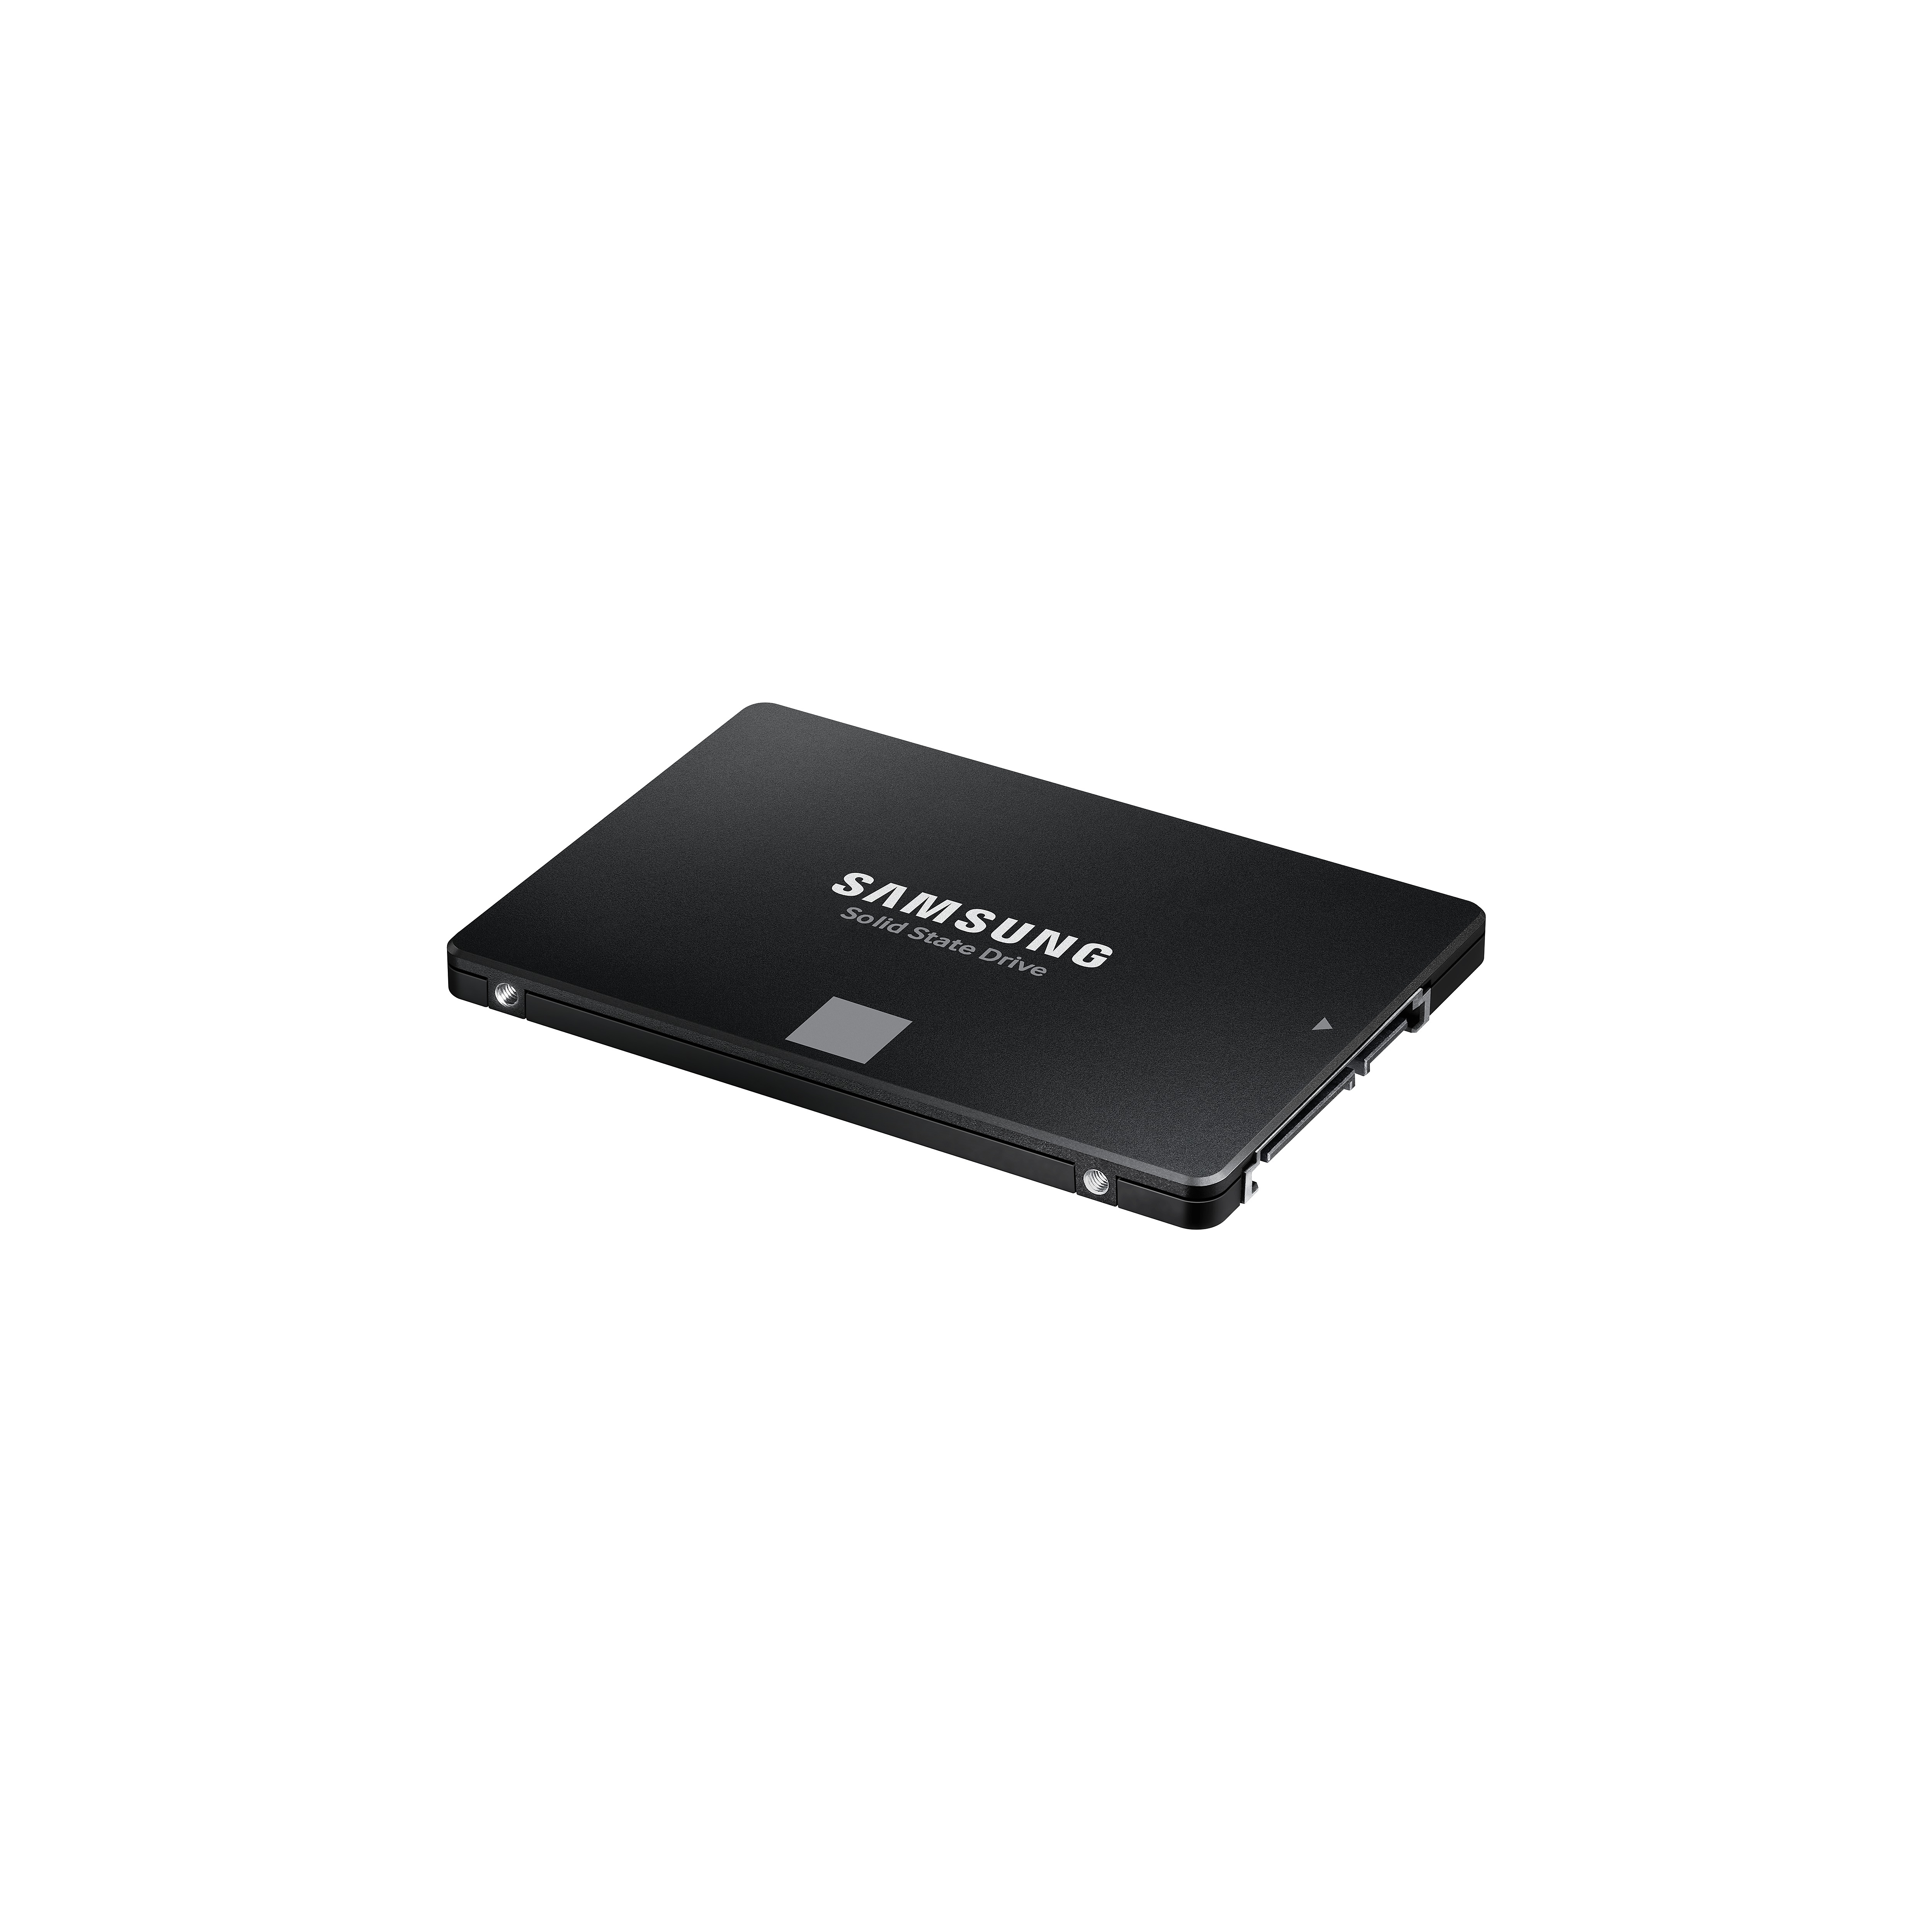 SAMSUNG 870 EVO SSD 250GB SATA